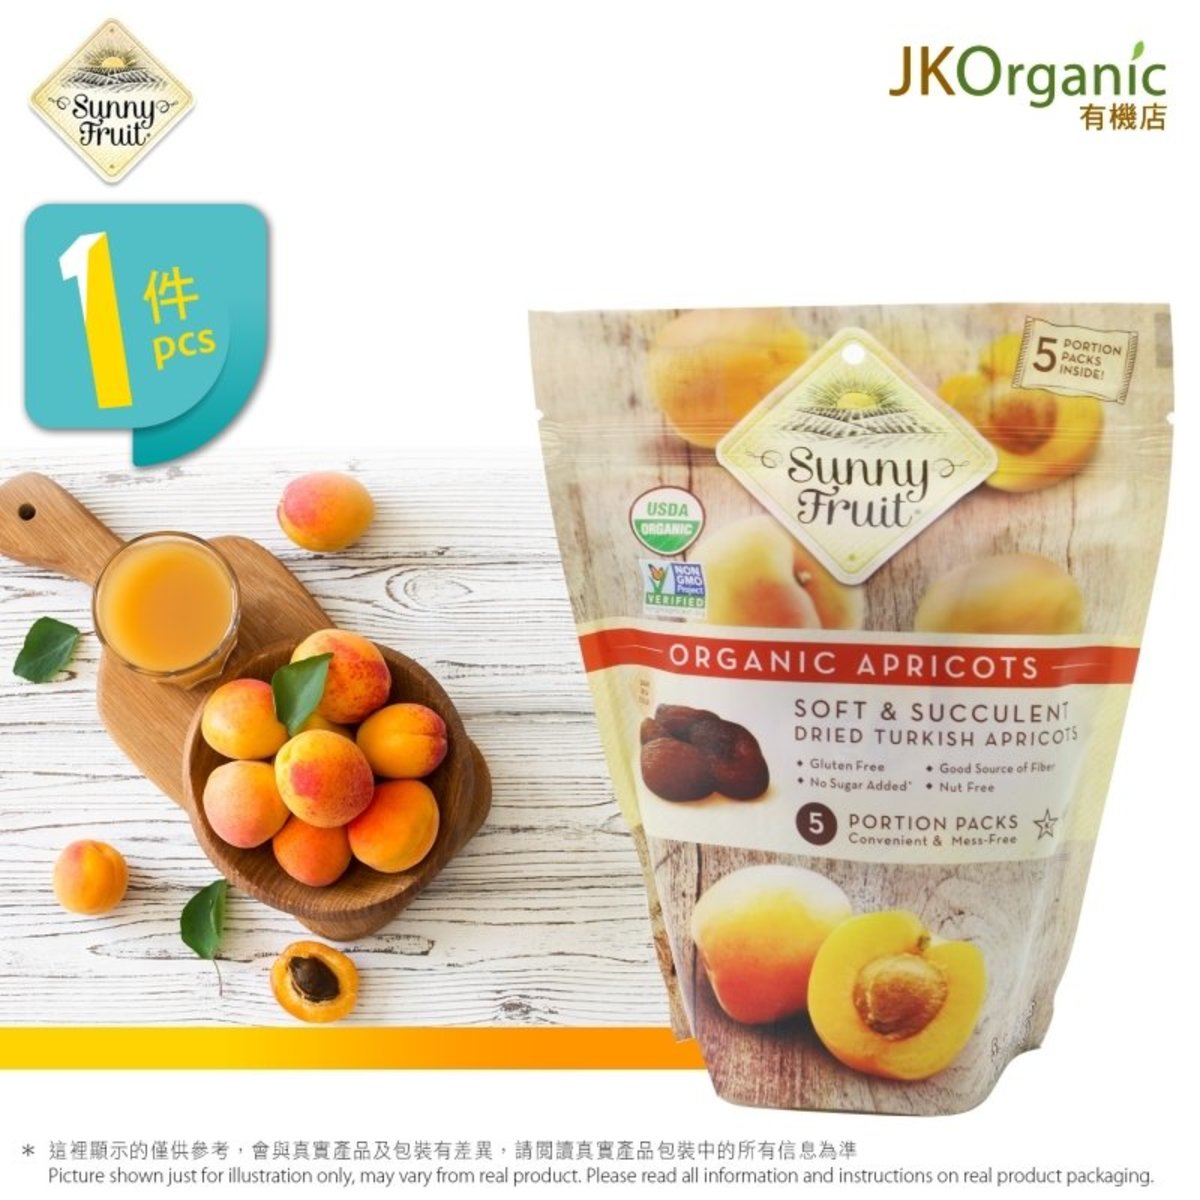 有機杏脯乾(5小包裝) Organic Apricots (5 Portion Packs) (250g)